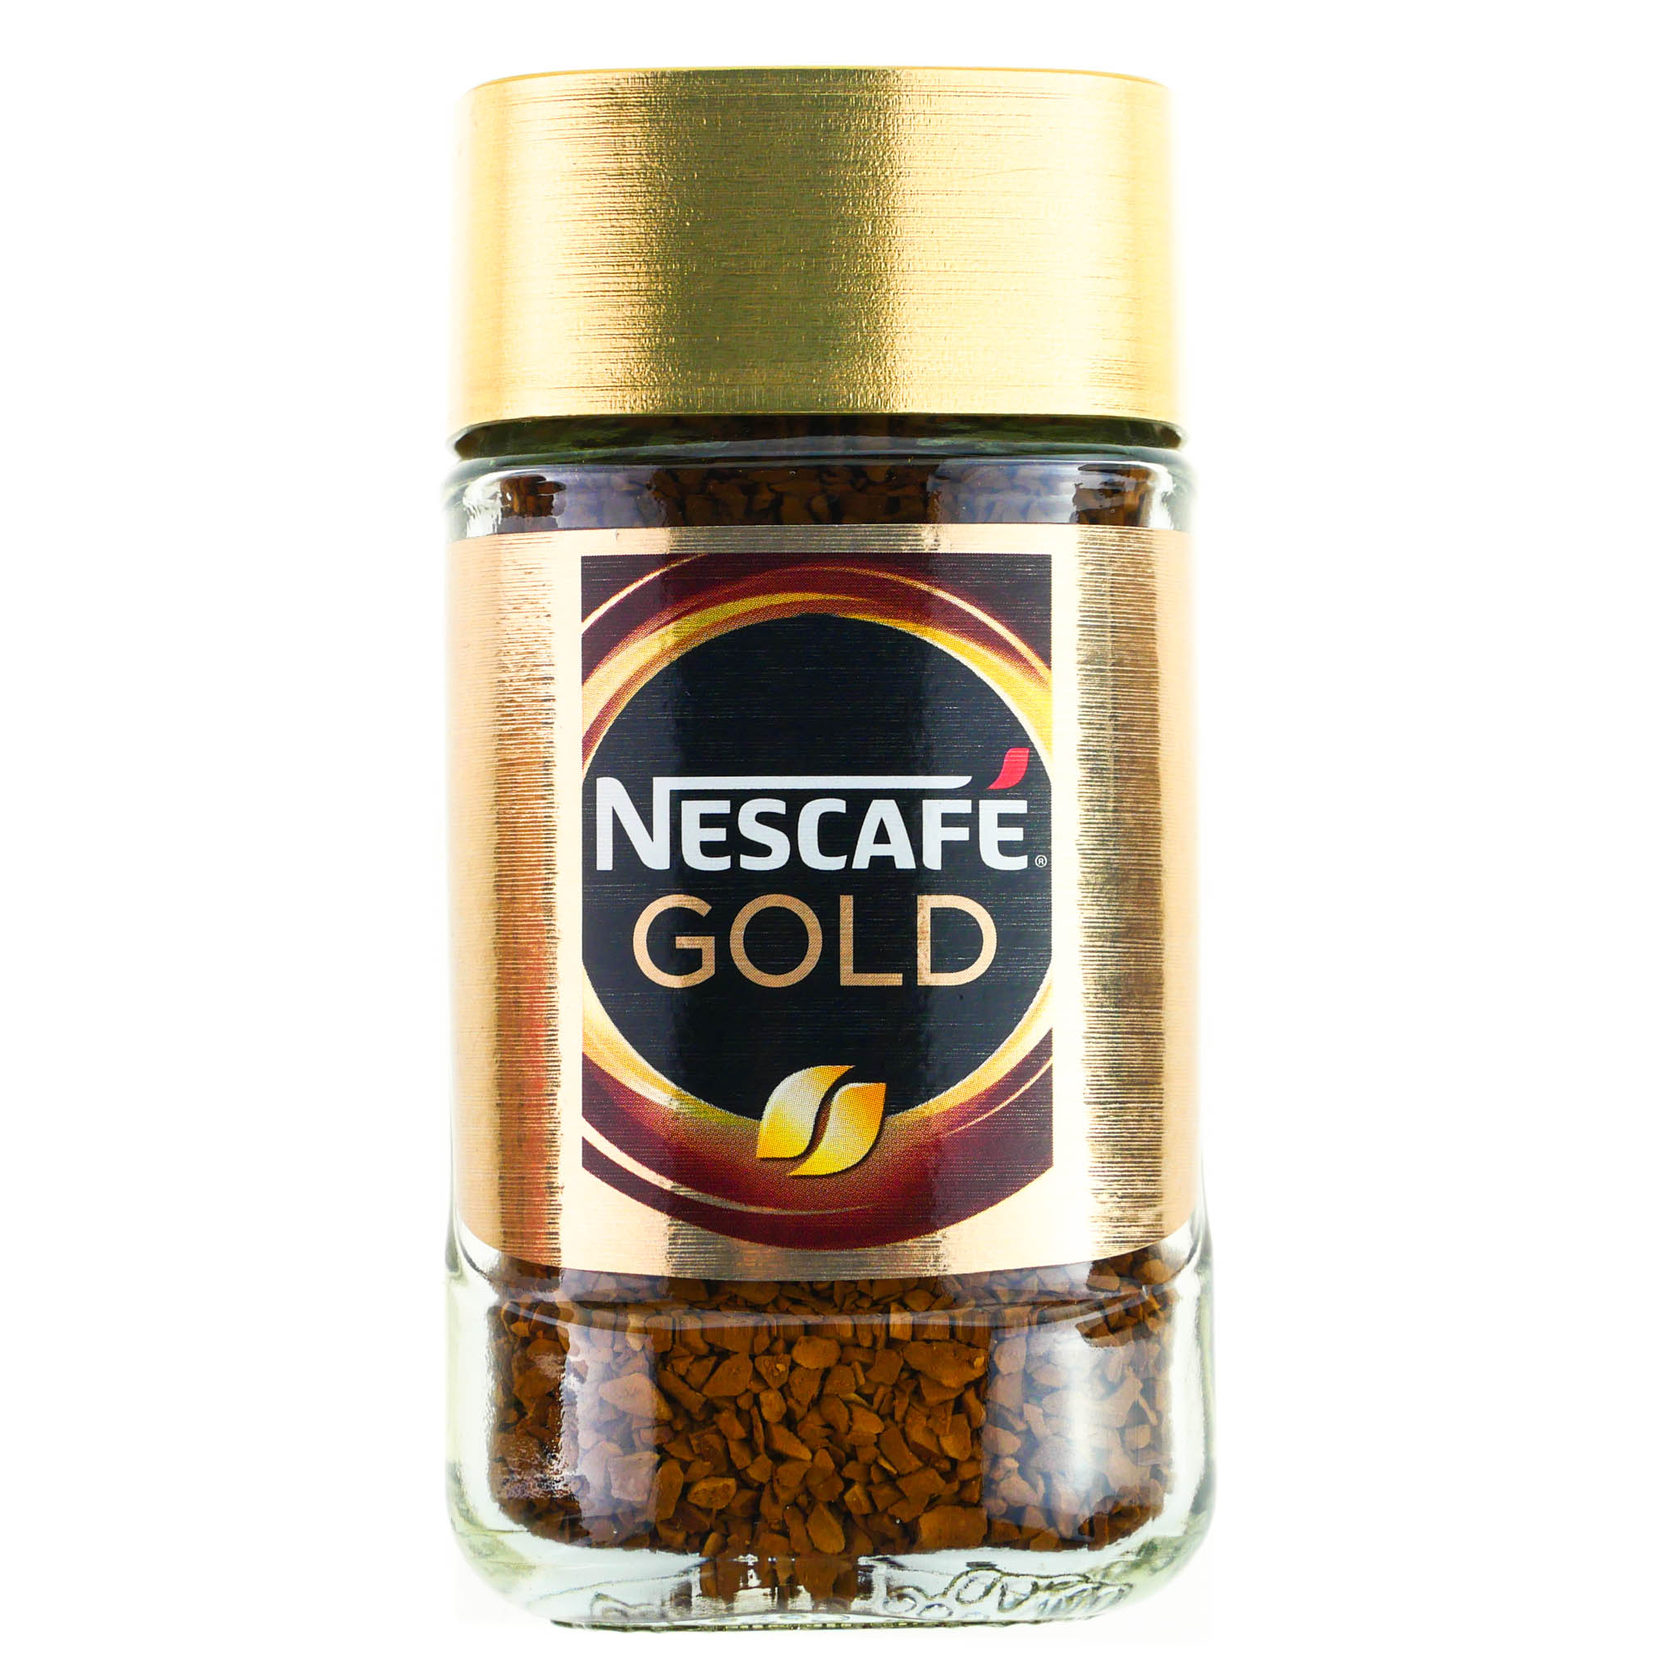 Nescafe gold 320. Кофе Нескафе Голд 47,5г. Кофе растворимый Nescafe Gold 47.5 г. Кофе Нескафе Голд 47,5 гр. Нескафе Голд стекло 47,5 г.